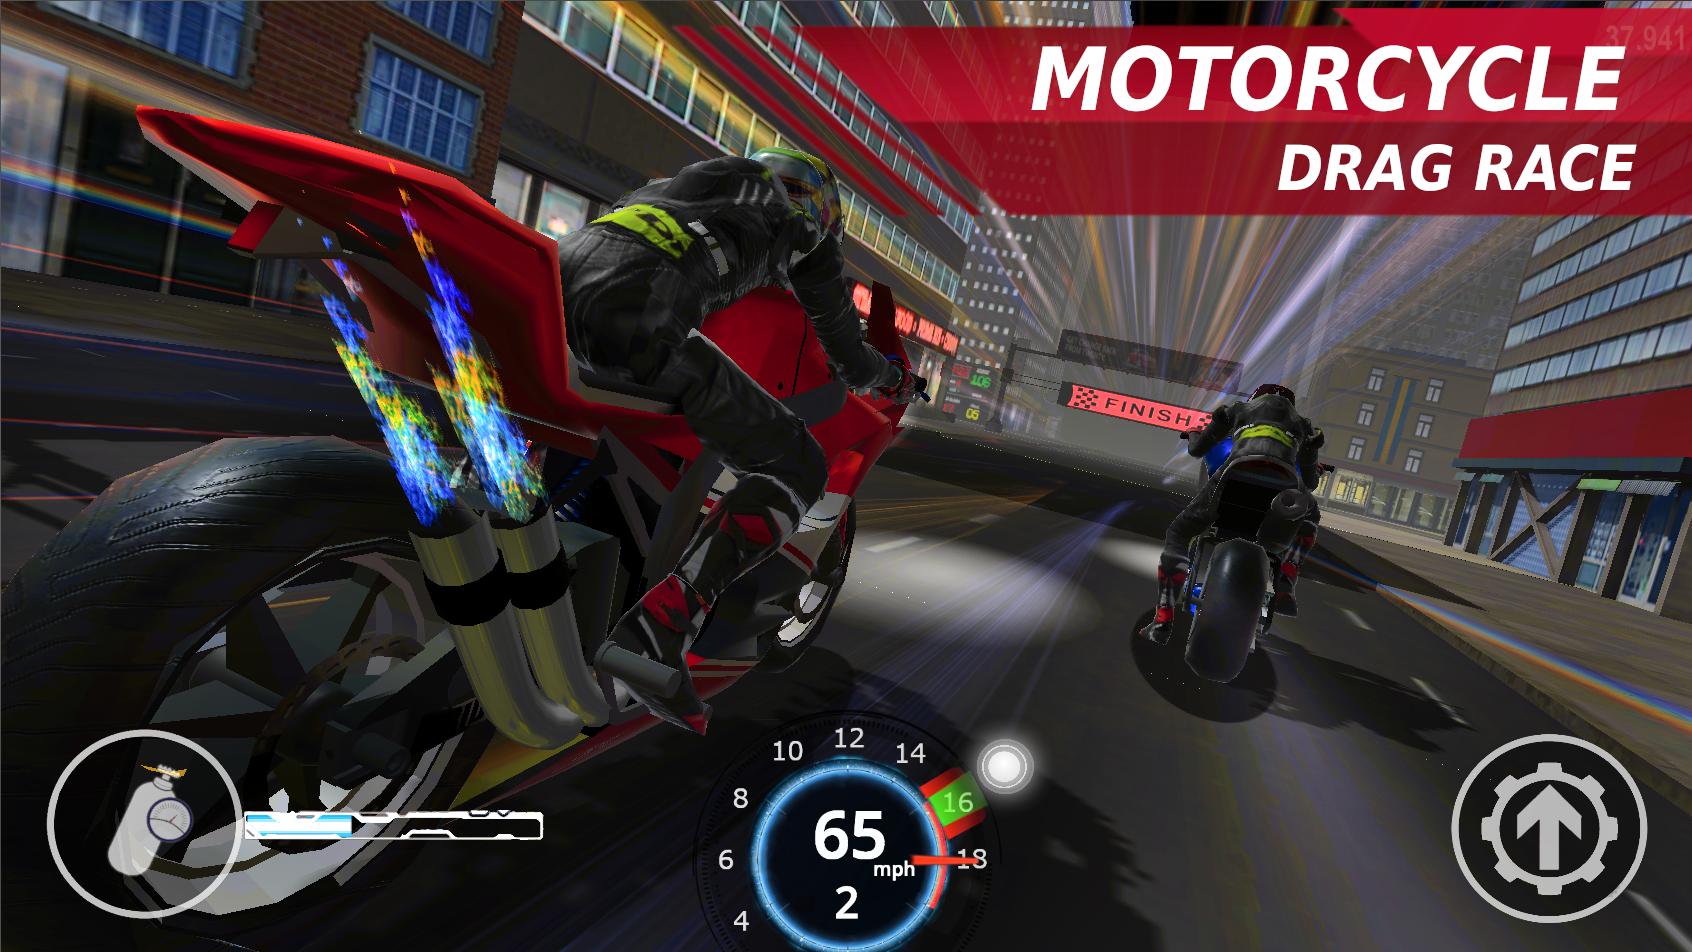 Rebel Gears Drag Bike Racing / CSR Race Moto Game 1.3.2 Screenshot 2